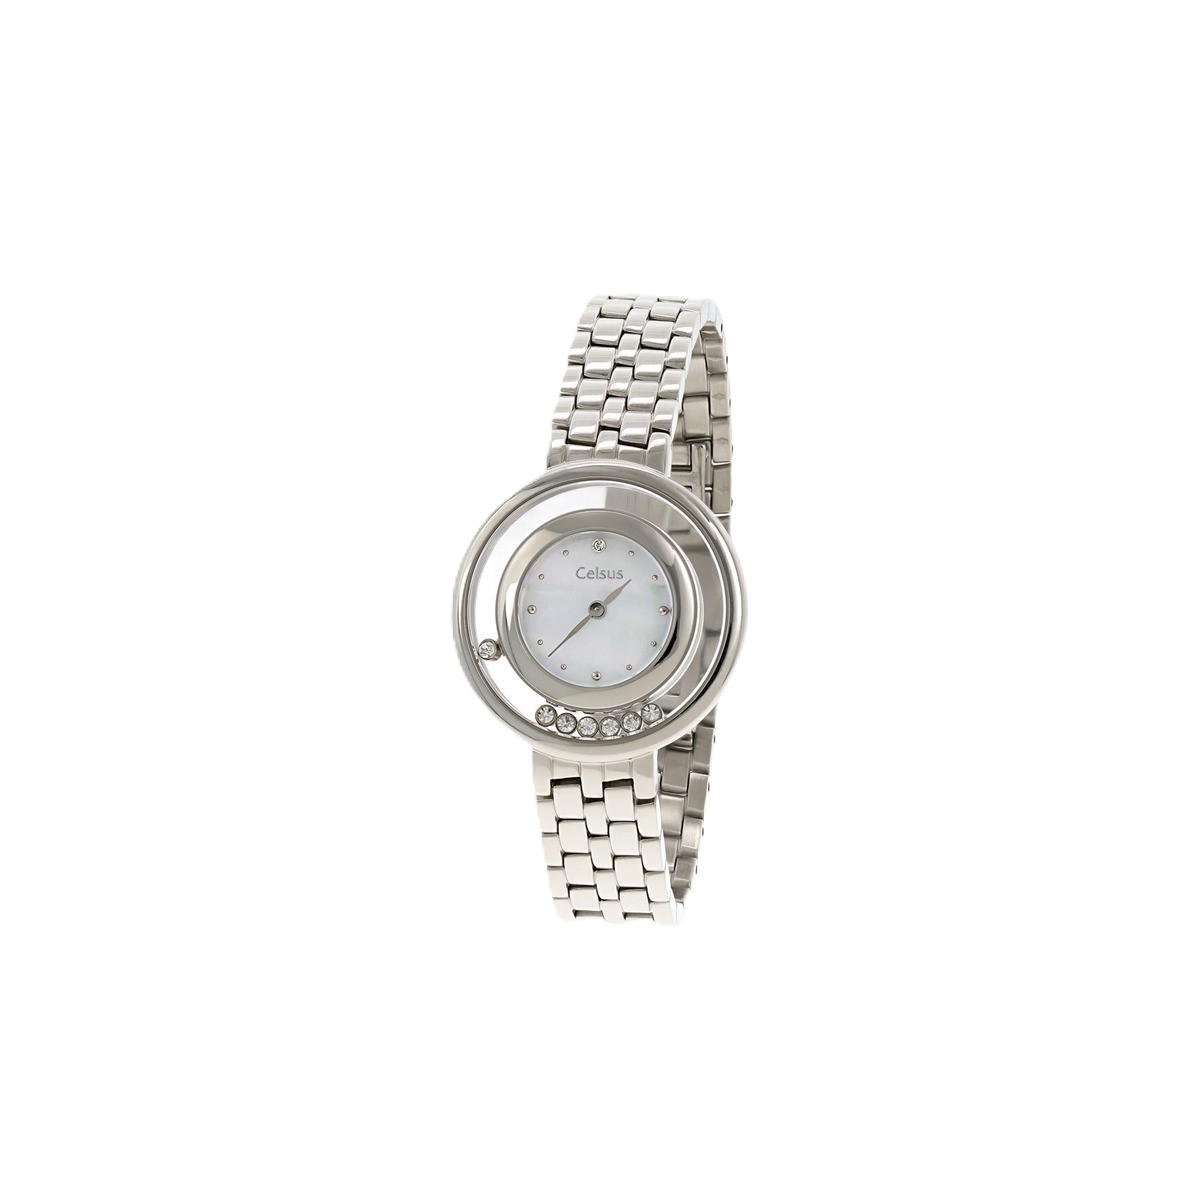 Celsus Watch 8958